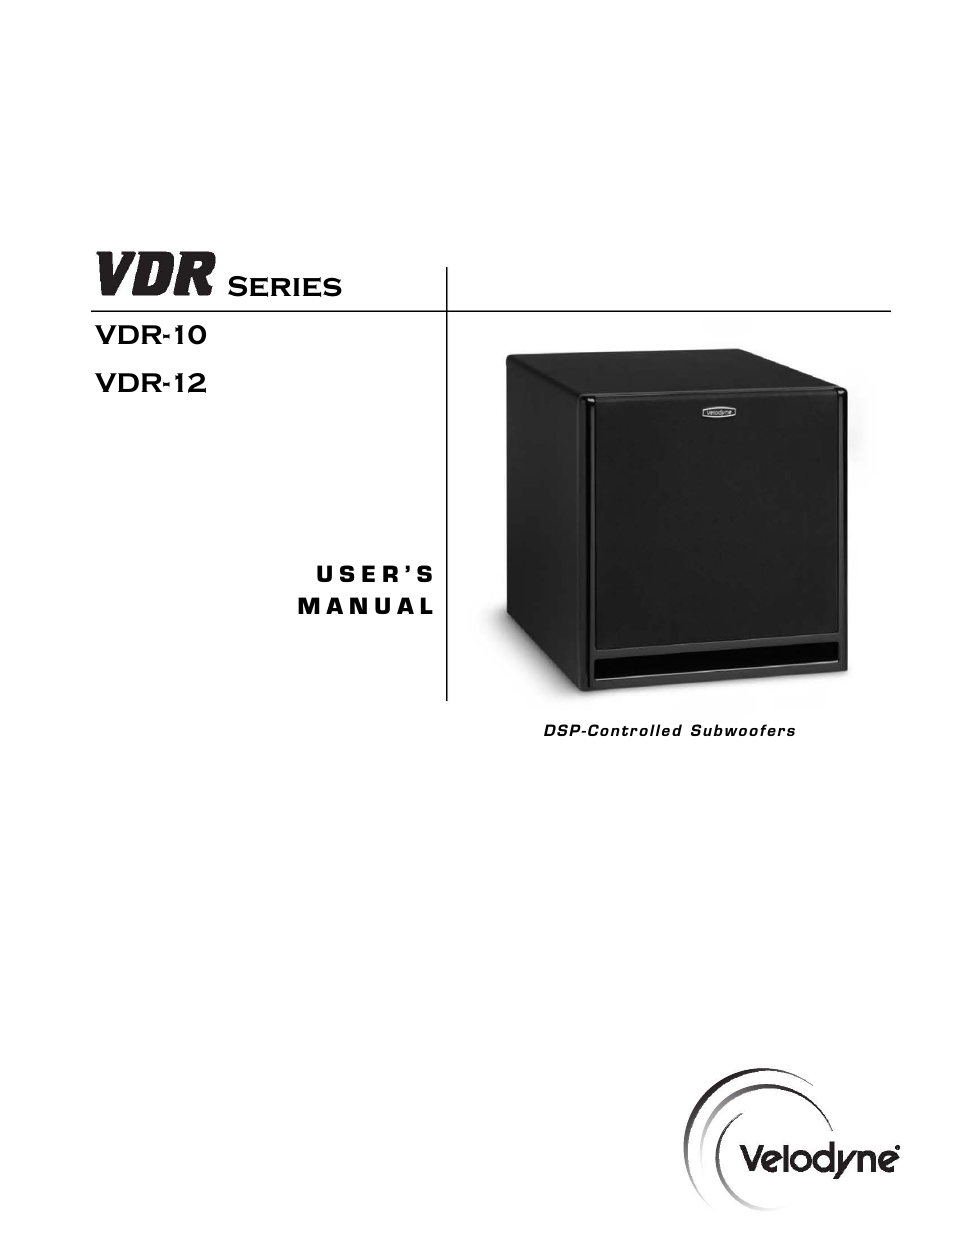 VDR Series